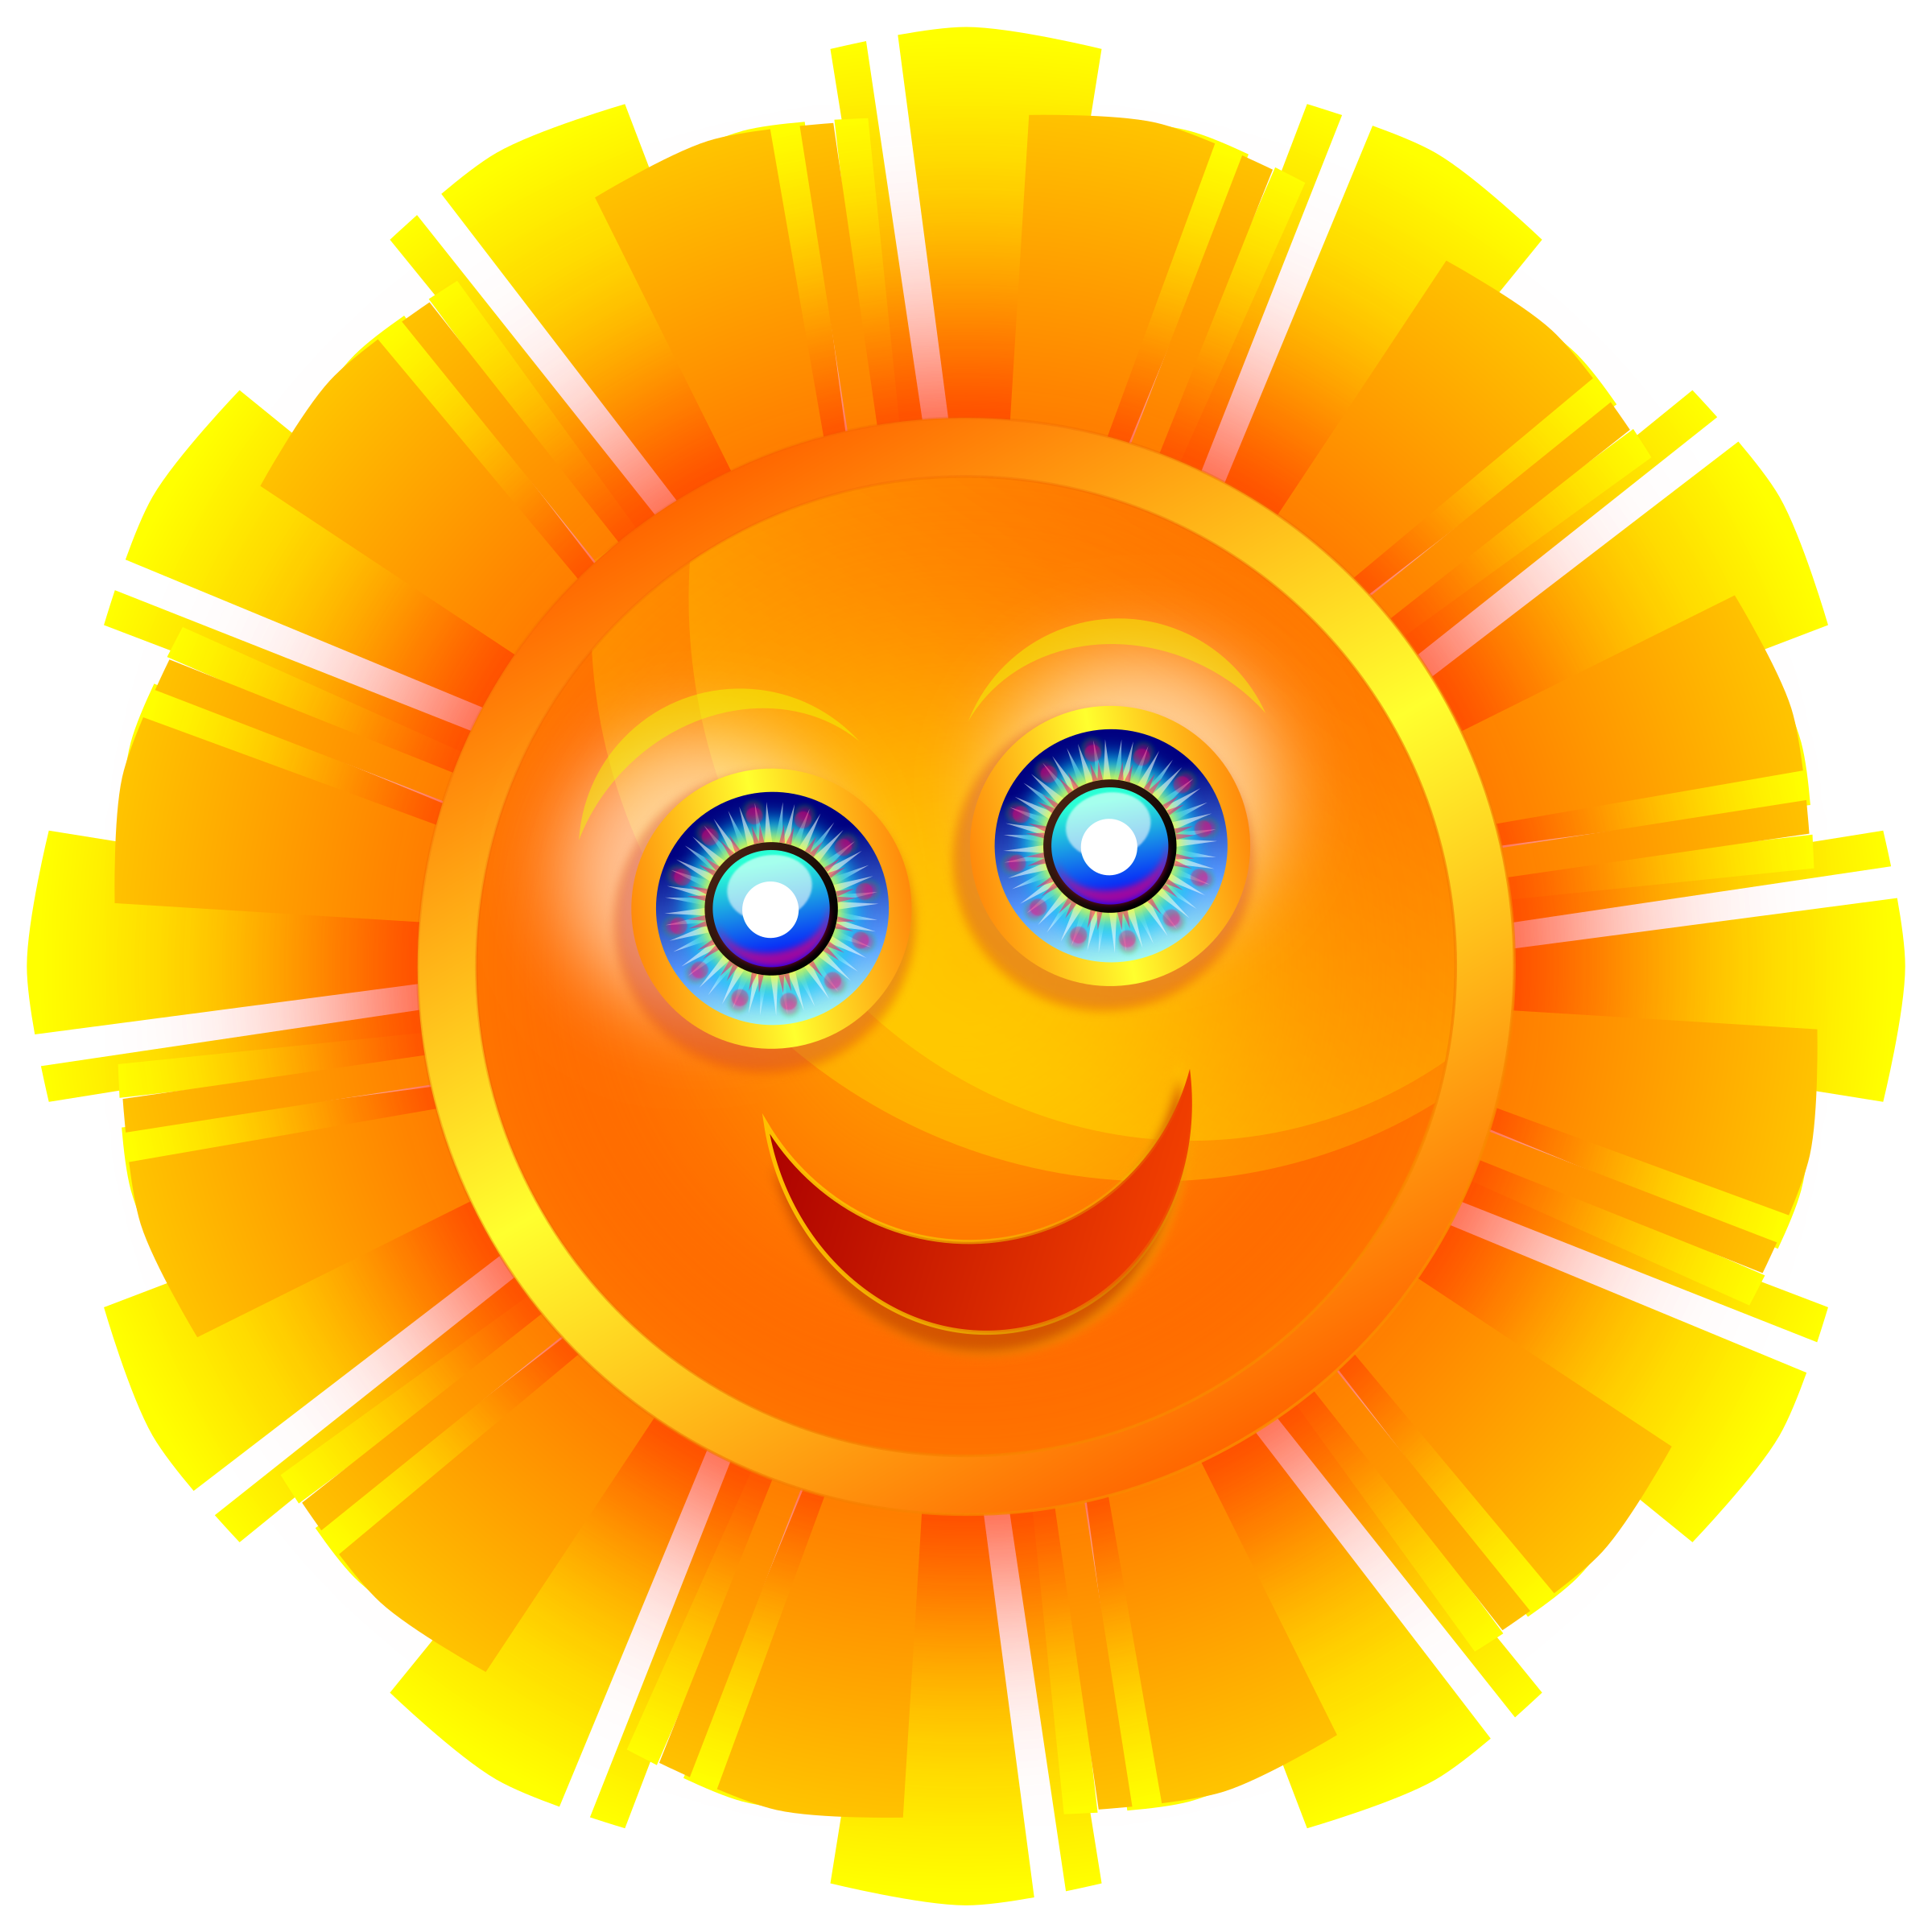 Happy sun vector clipart free cc0 images